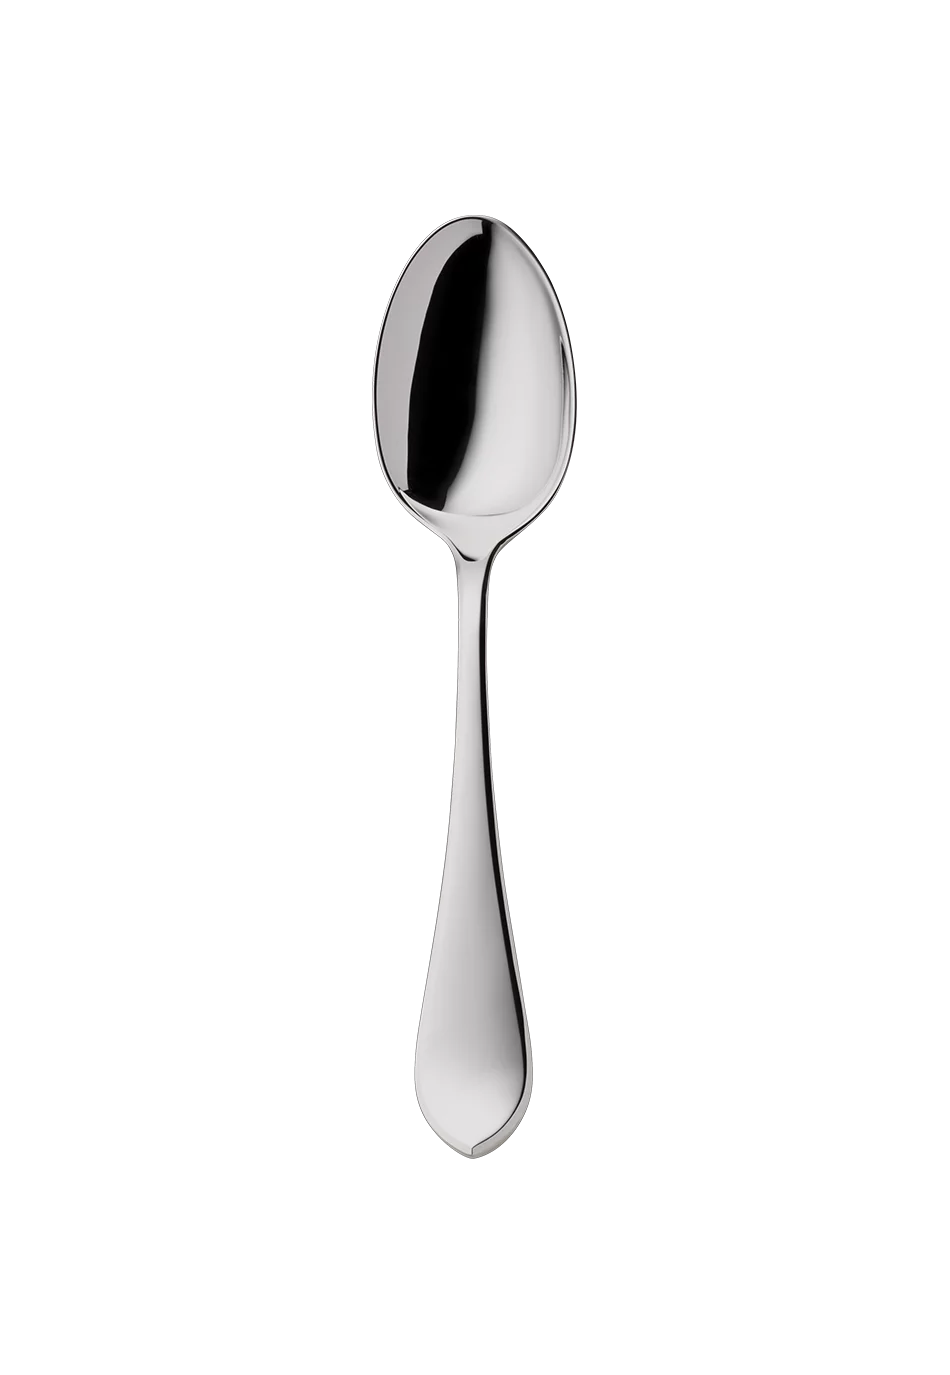 Eclipse Menu Spoon (150g massive silverplated)